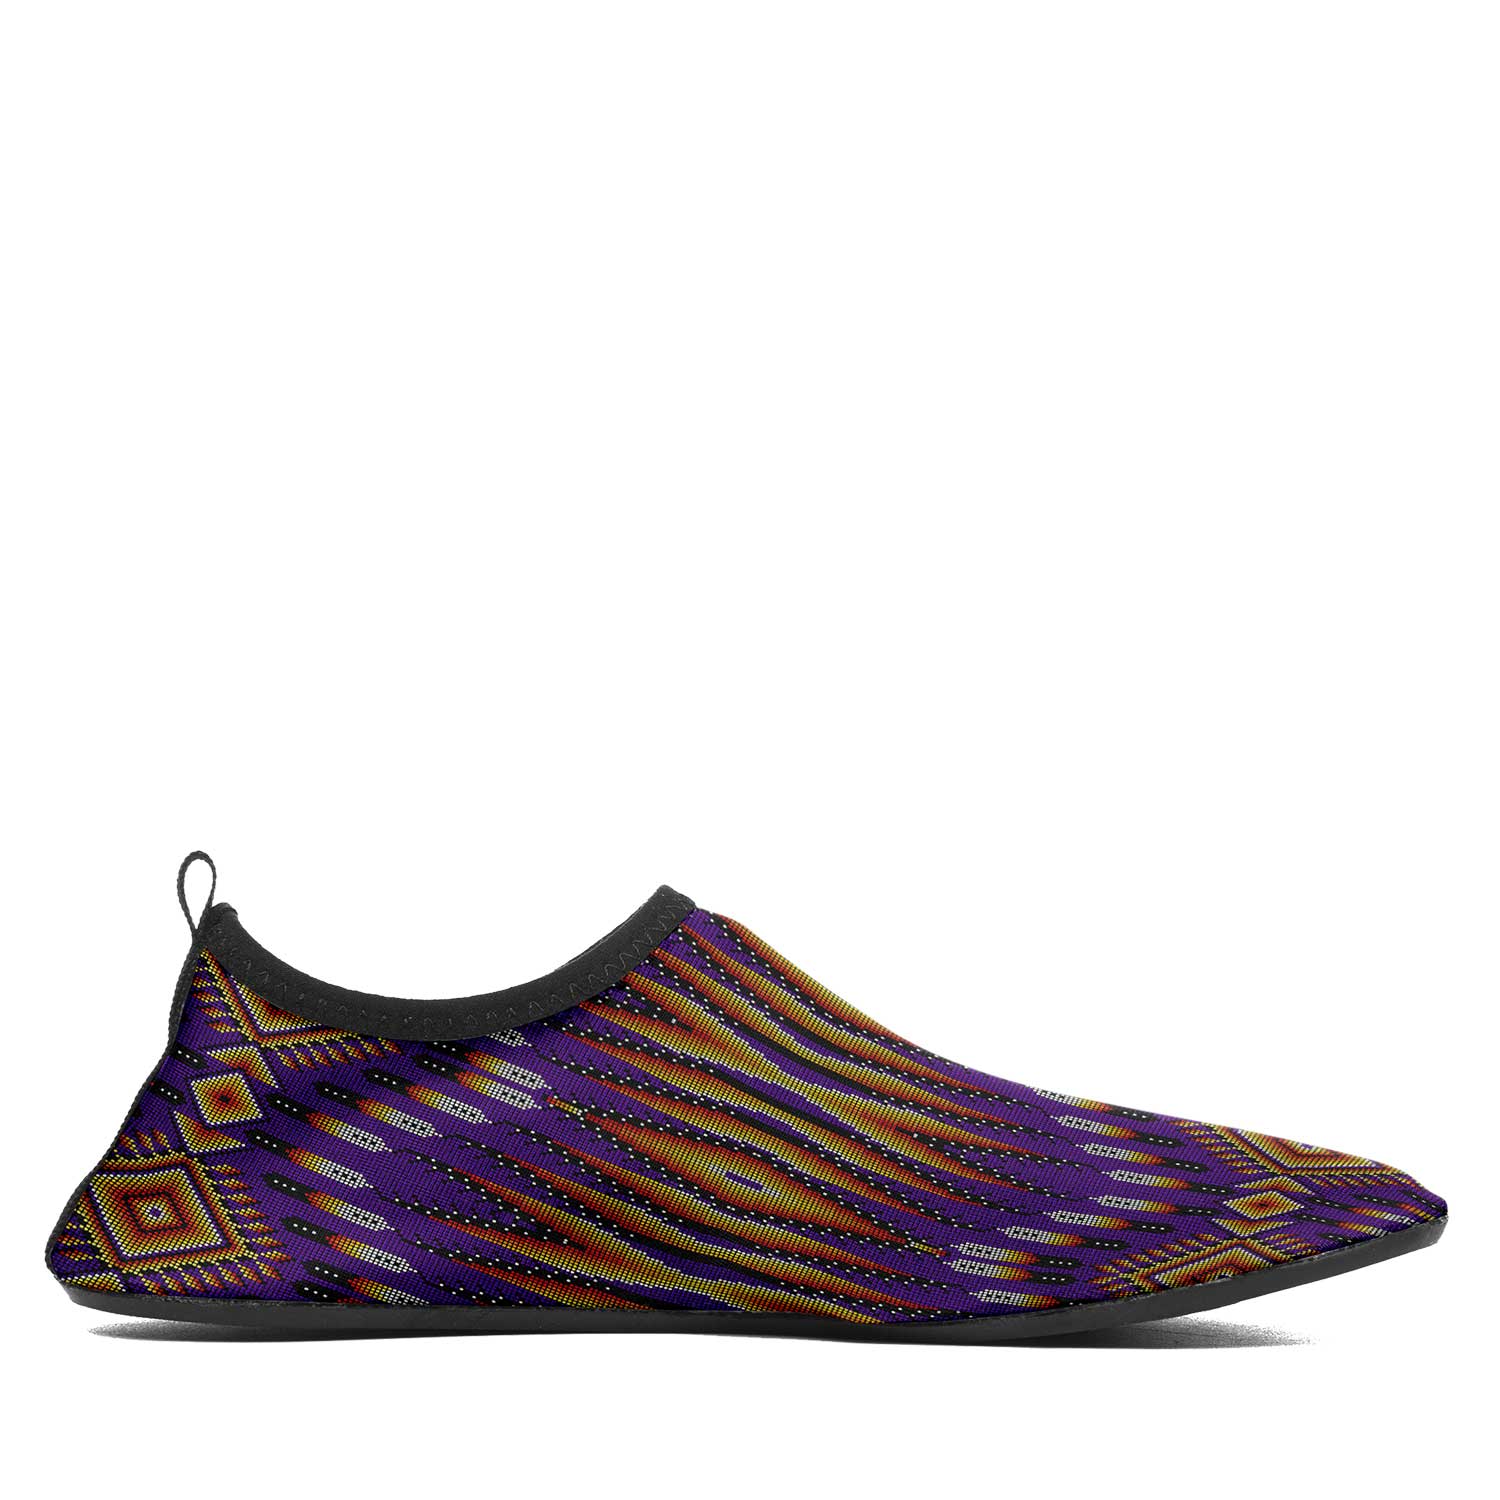 Fire Feather Purple Kid's Sockamoccs Slip On Shoes